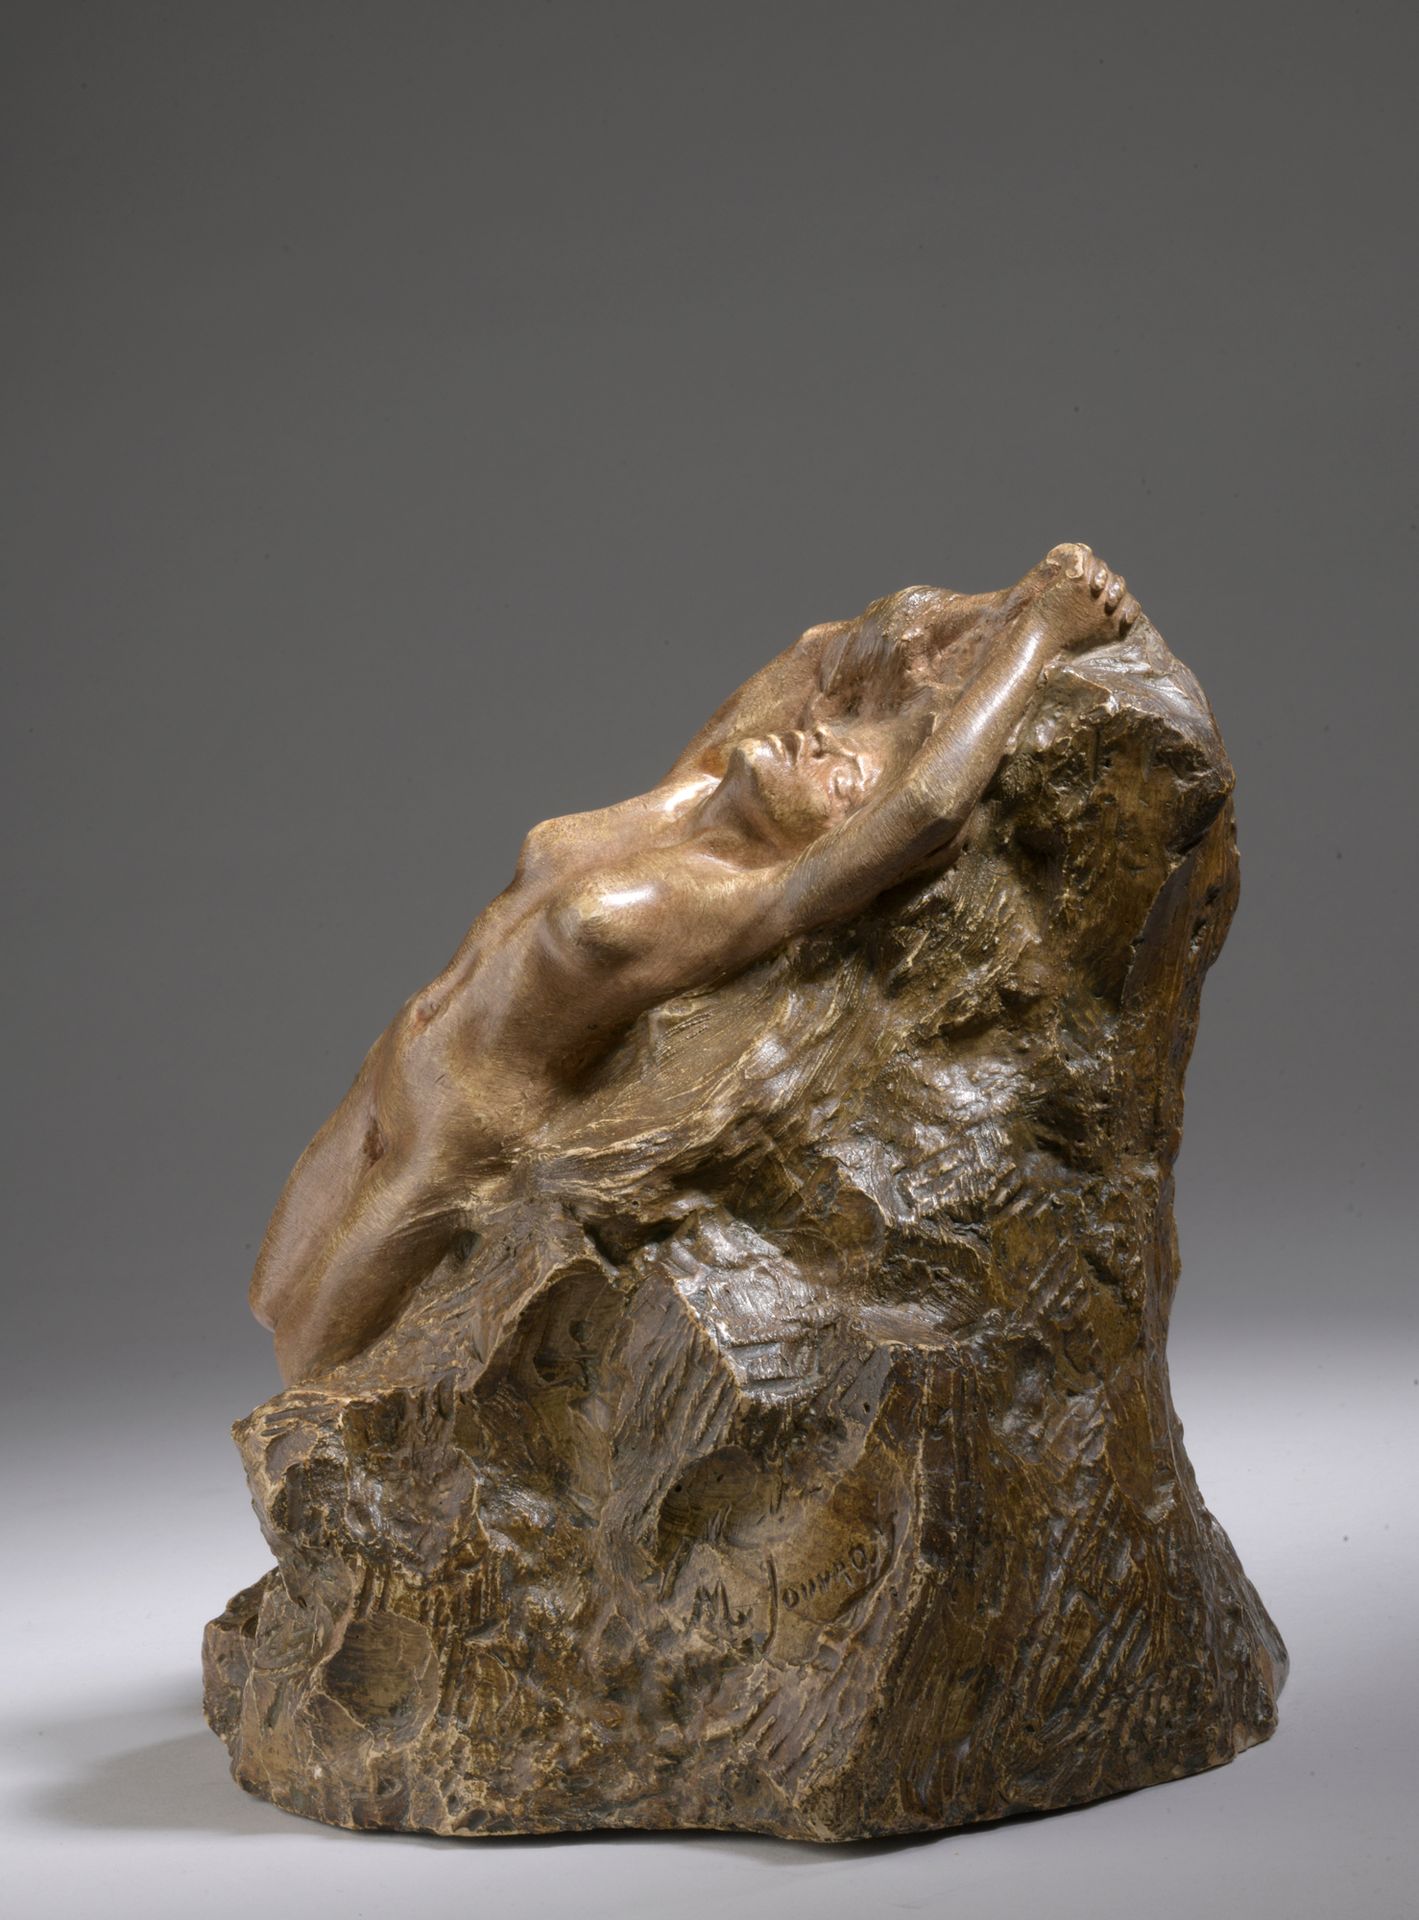 Null 马德琳-朱弗莱 (1862-1935)

安朵美达被绑在她的石头上

石膏的拍打。

岩石上有M Jouvray的签名。

H.25宽24深20厘米
&hellip;